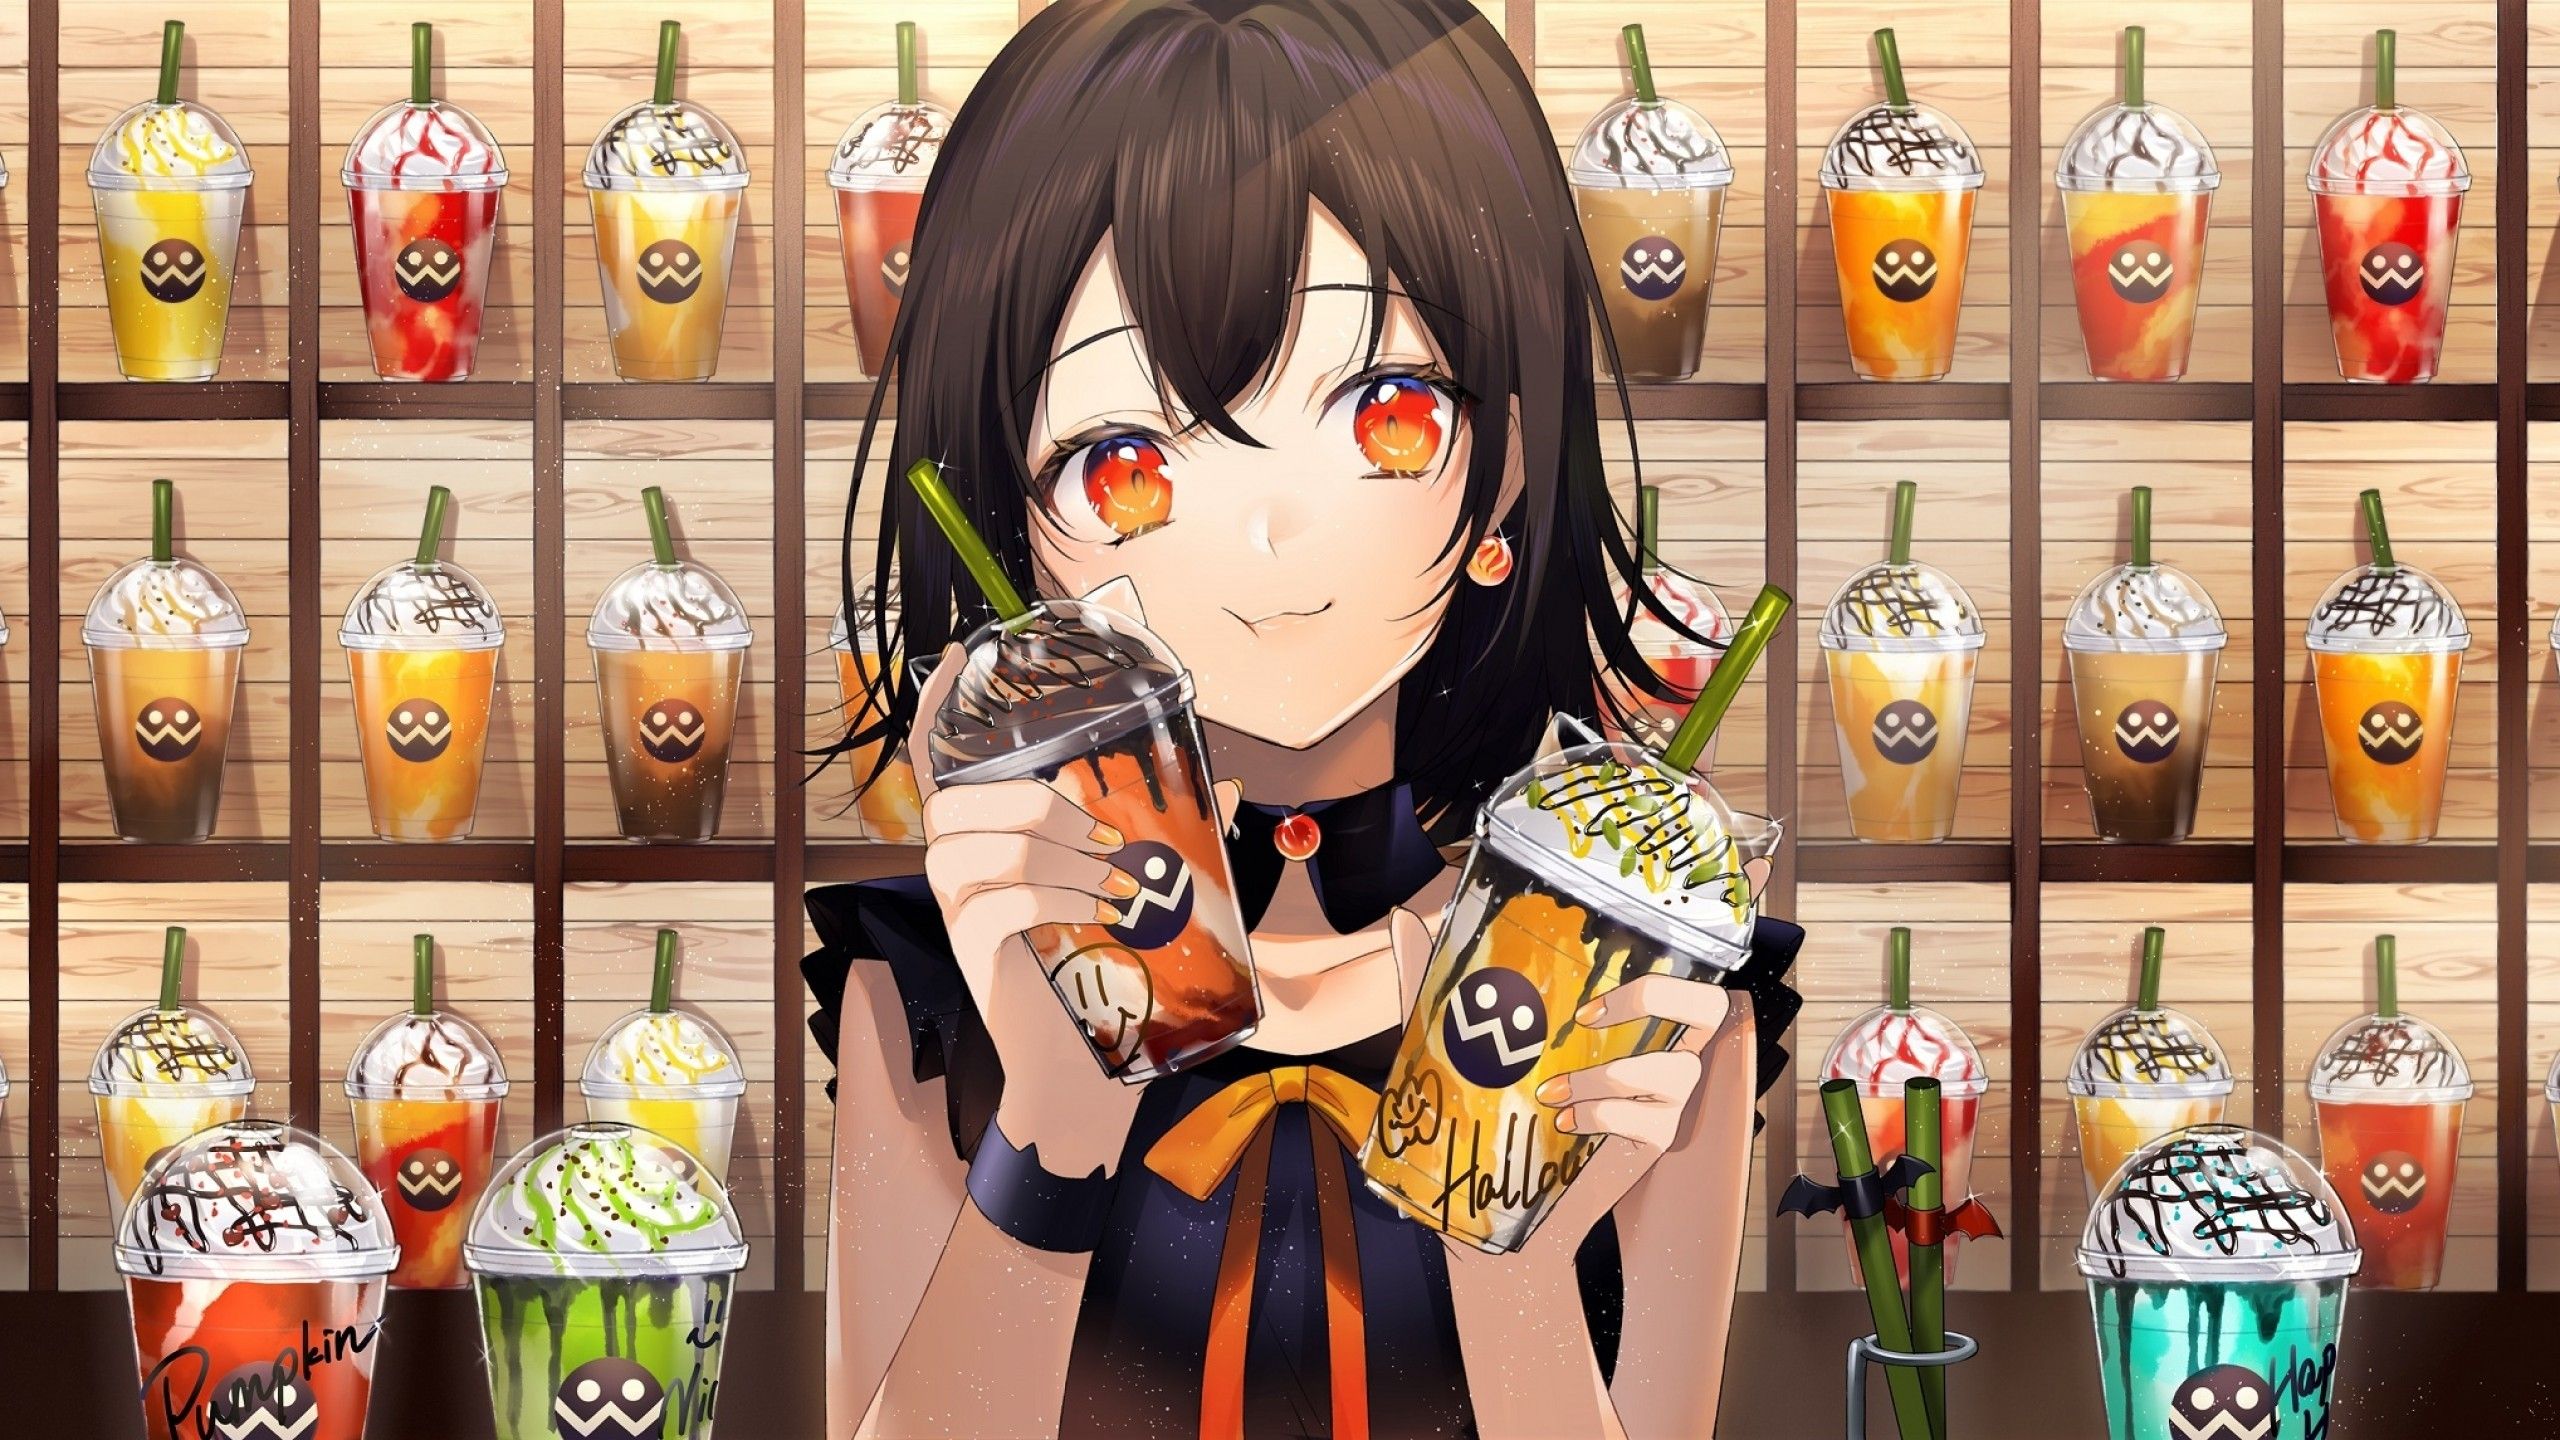 Download 2560x1440 Anime Girl, Waitress .wallpapermaiden.com